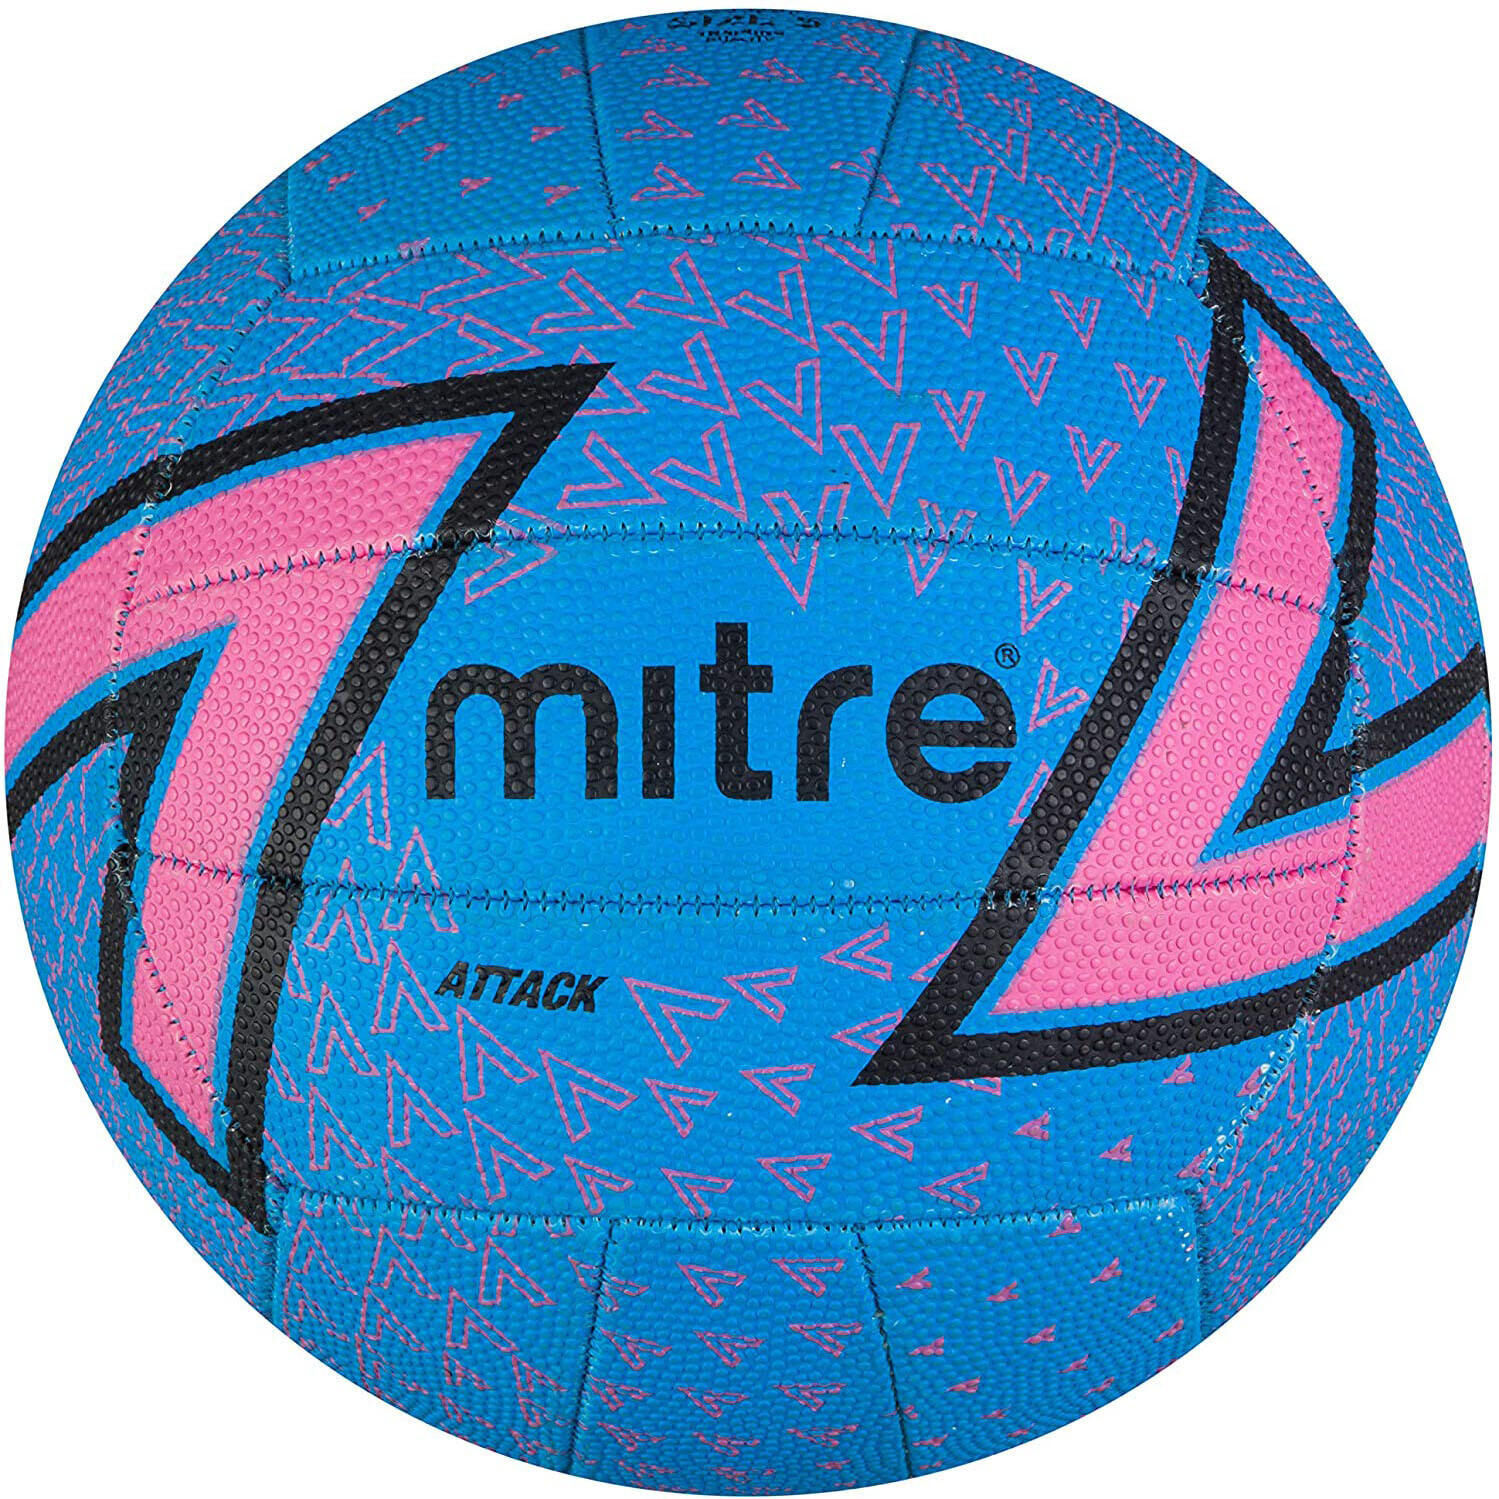 MITRE Attack Netball (Blue/Black/Pink)